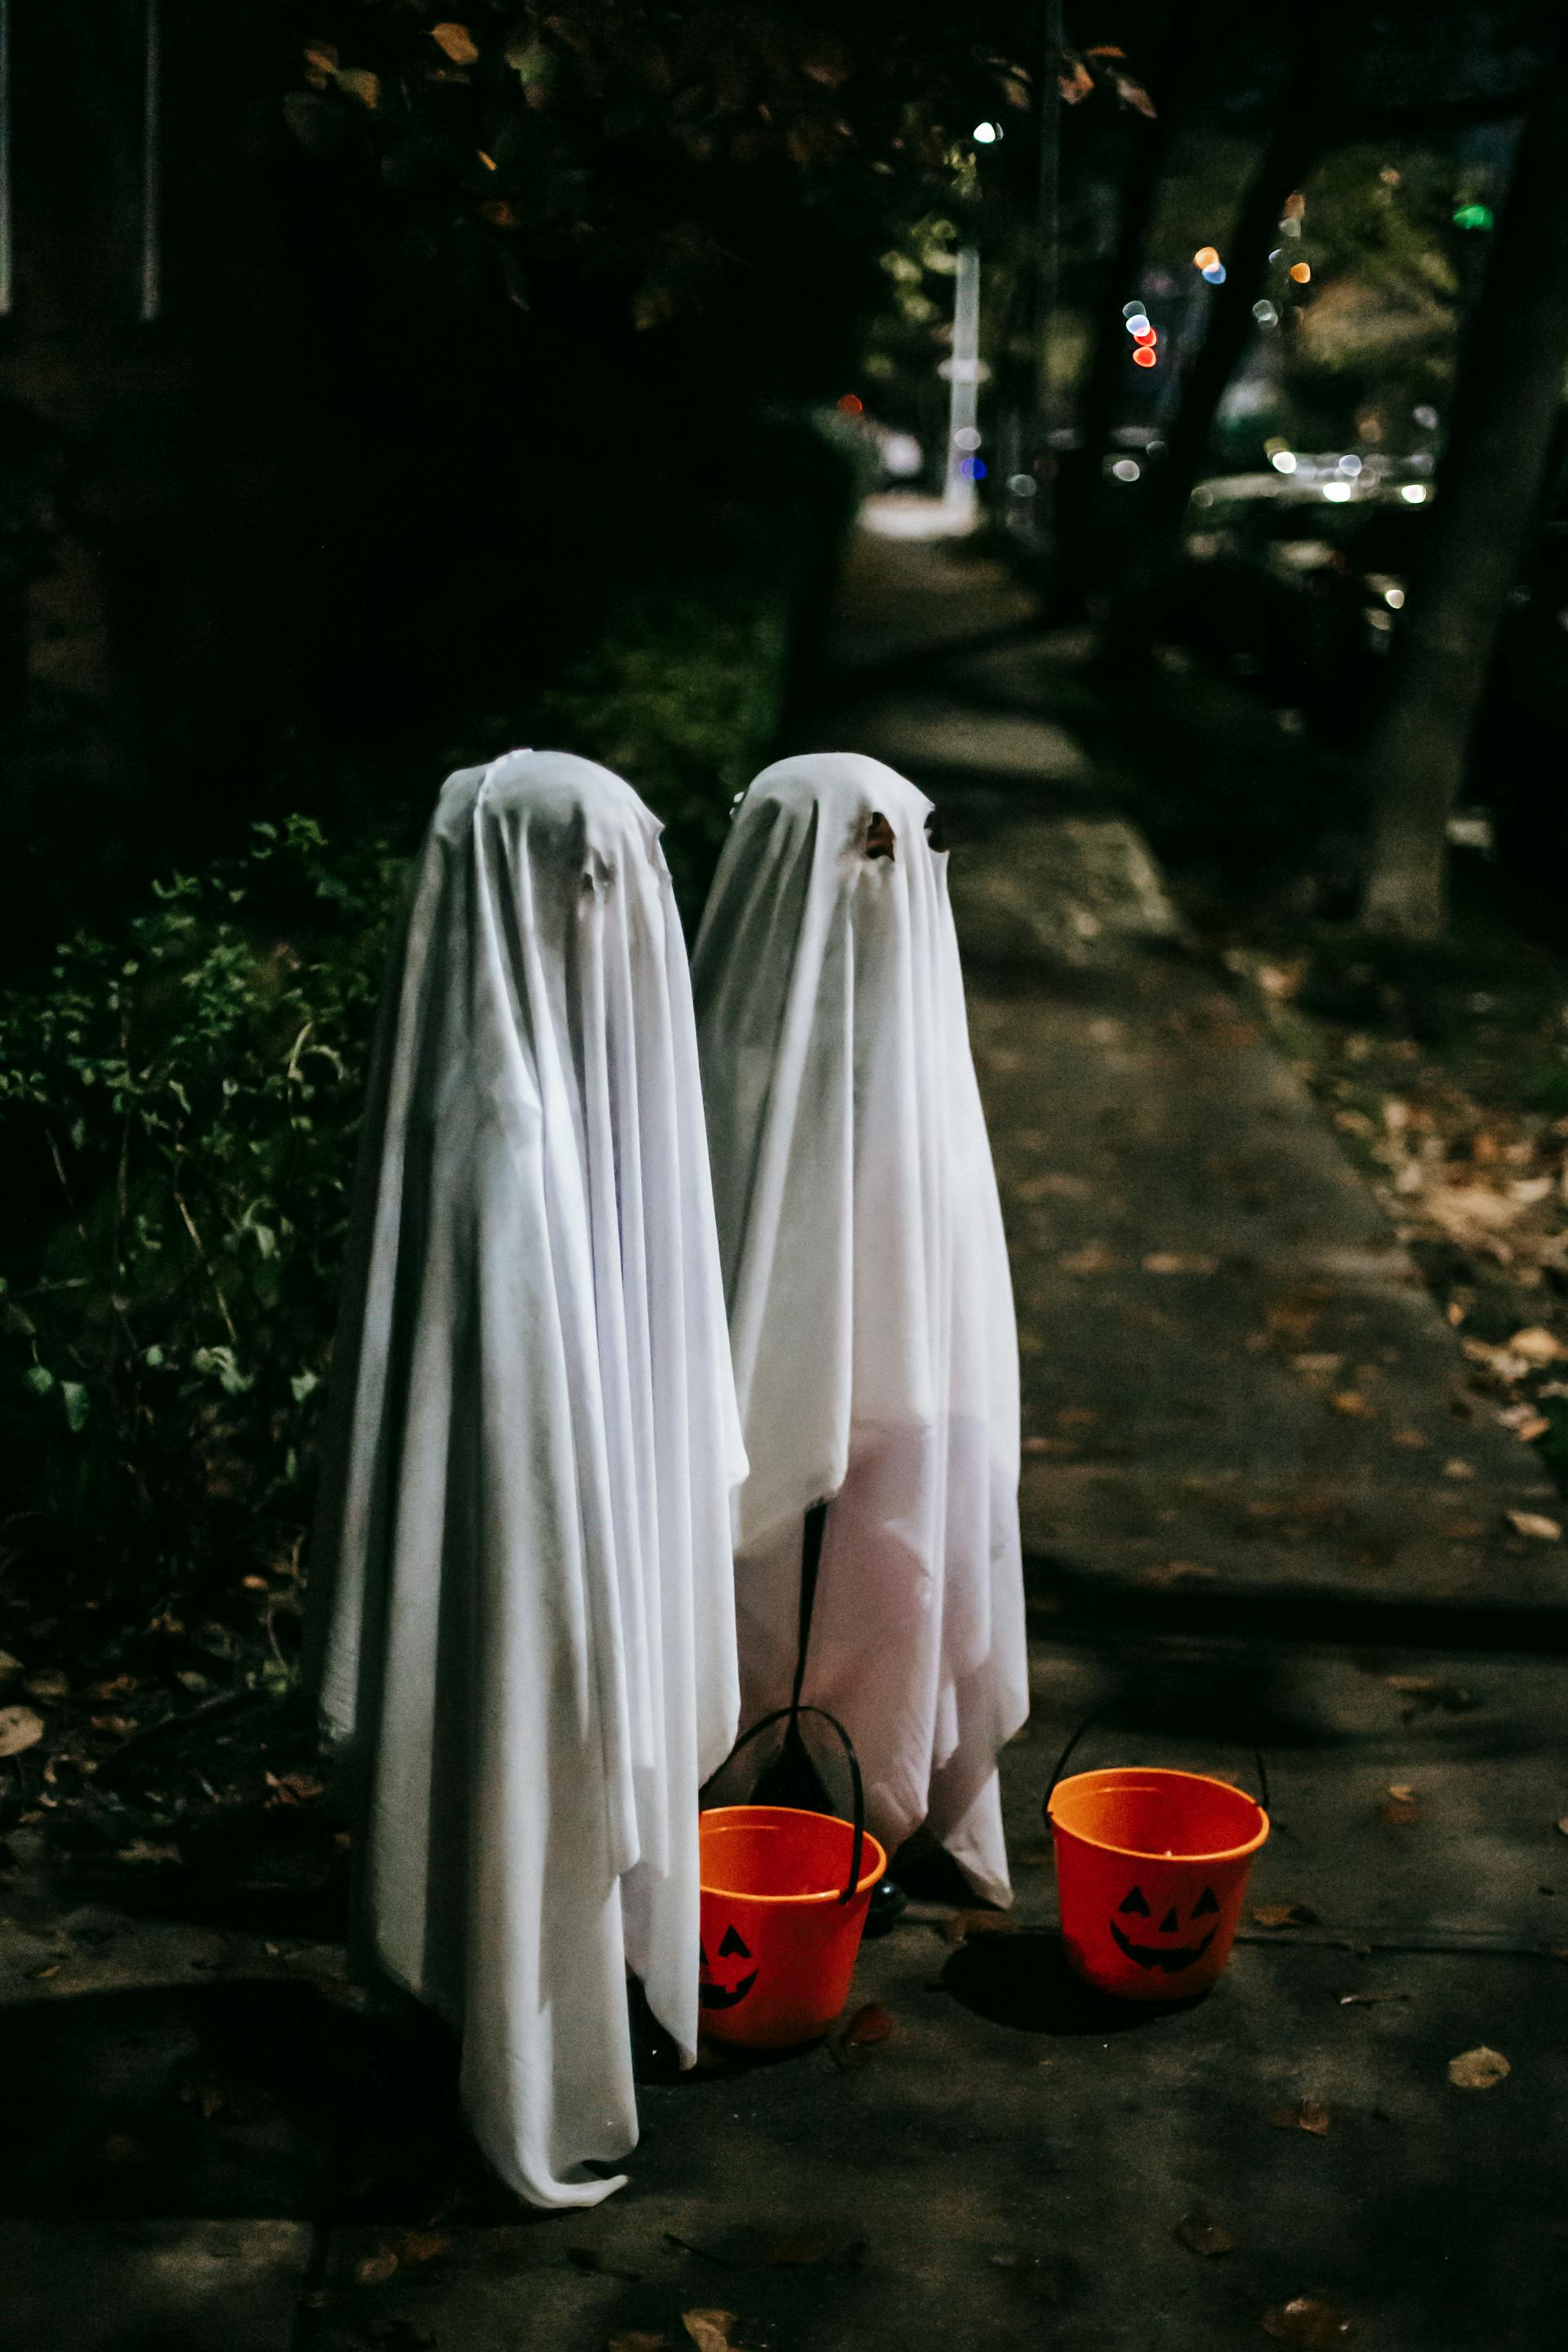 Children in ghost costumes | Source: Pexels